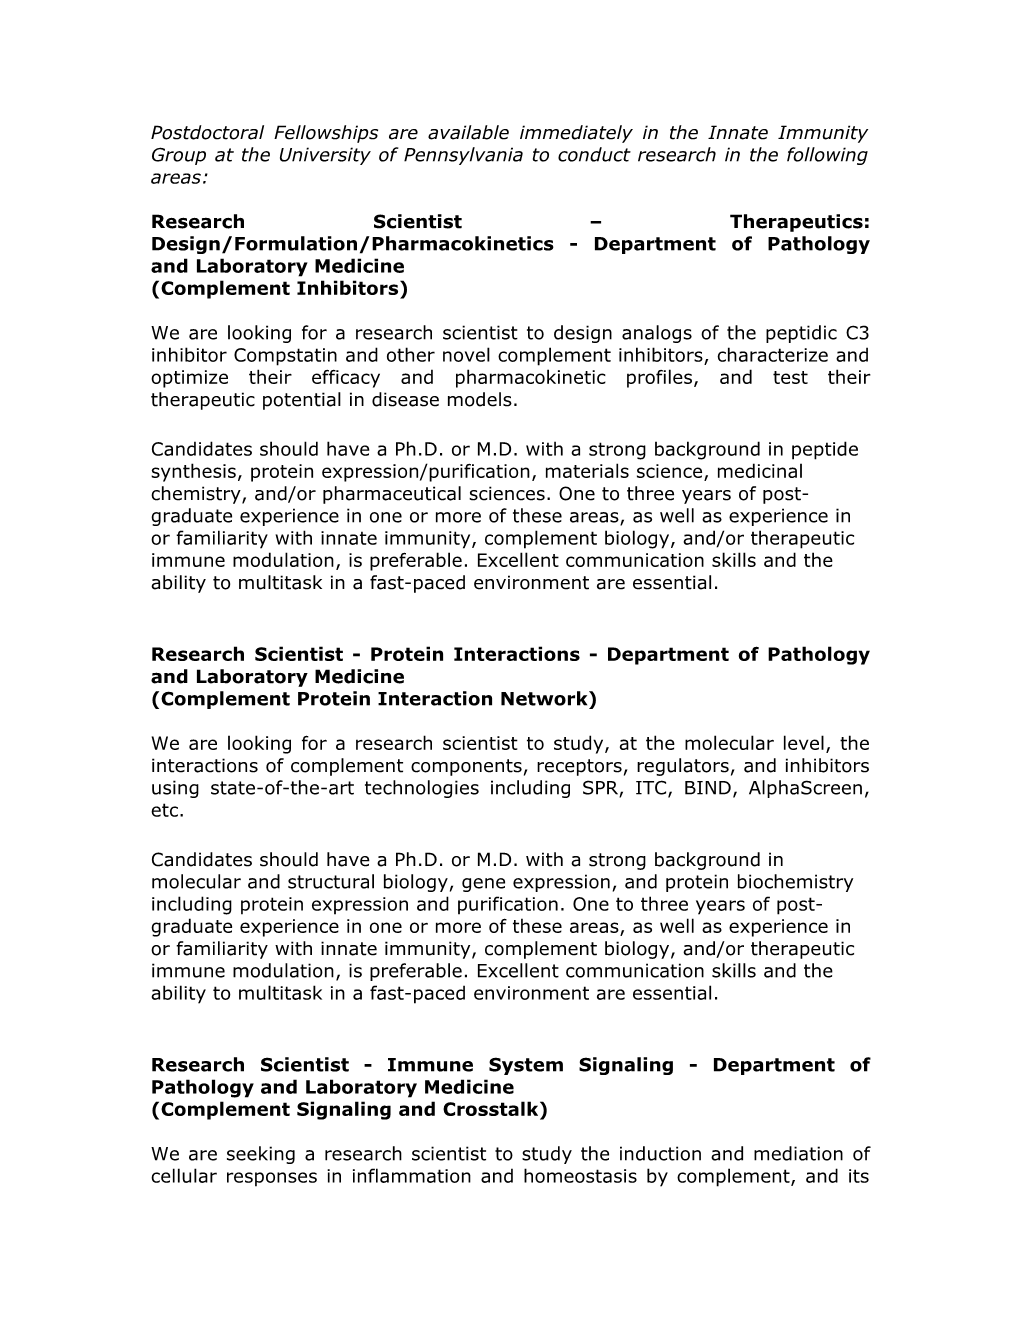 Research Scientist Therapeutics: Design/Formulation/Pharmacokinetics - Department of Pathology